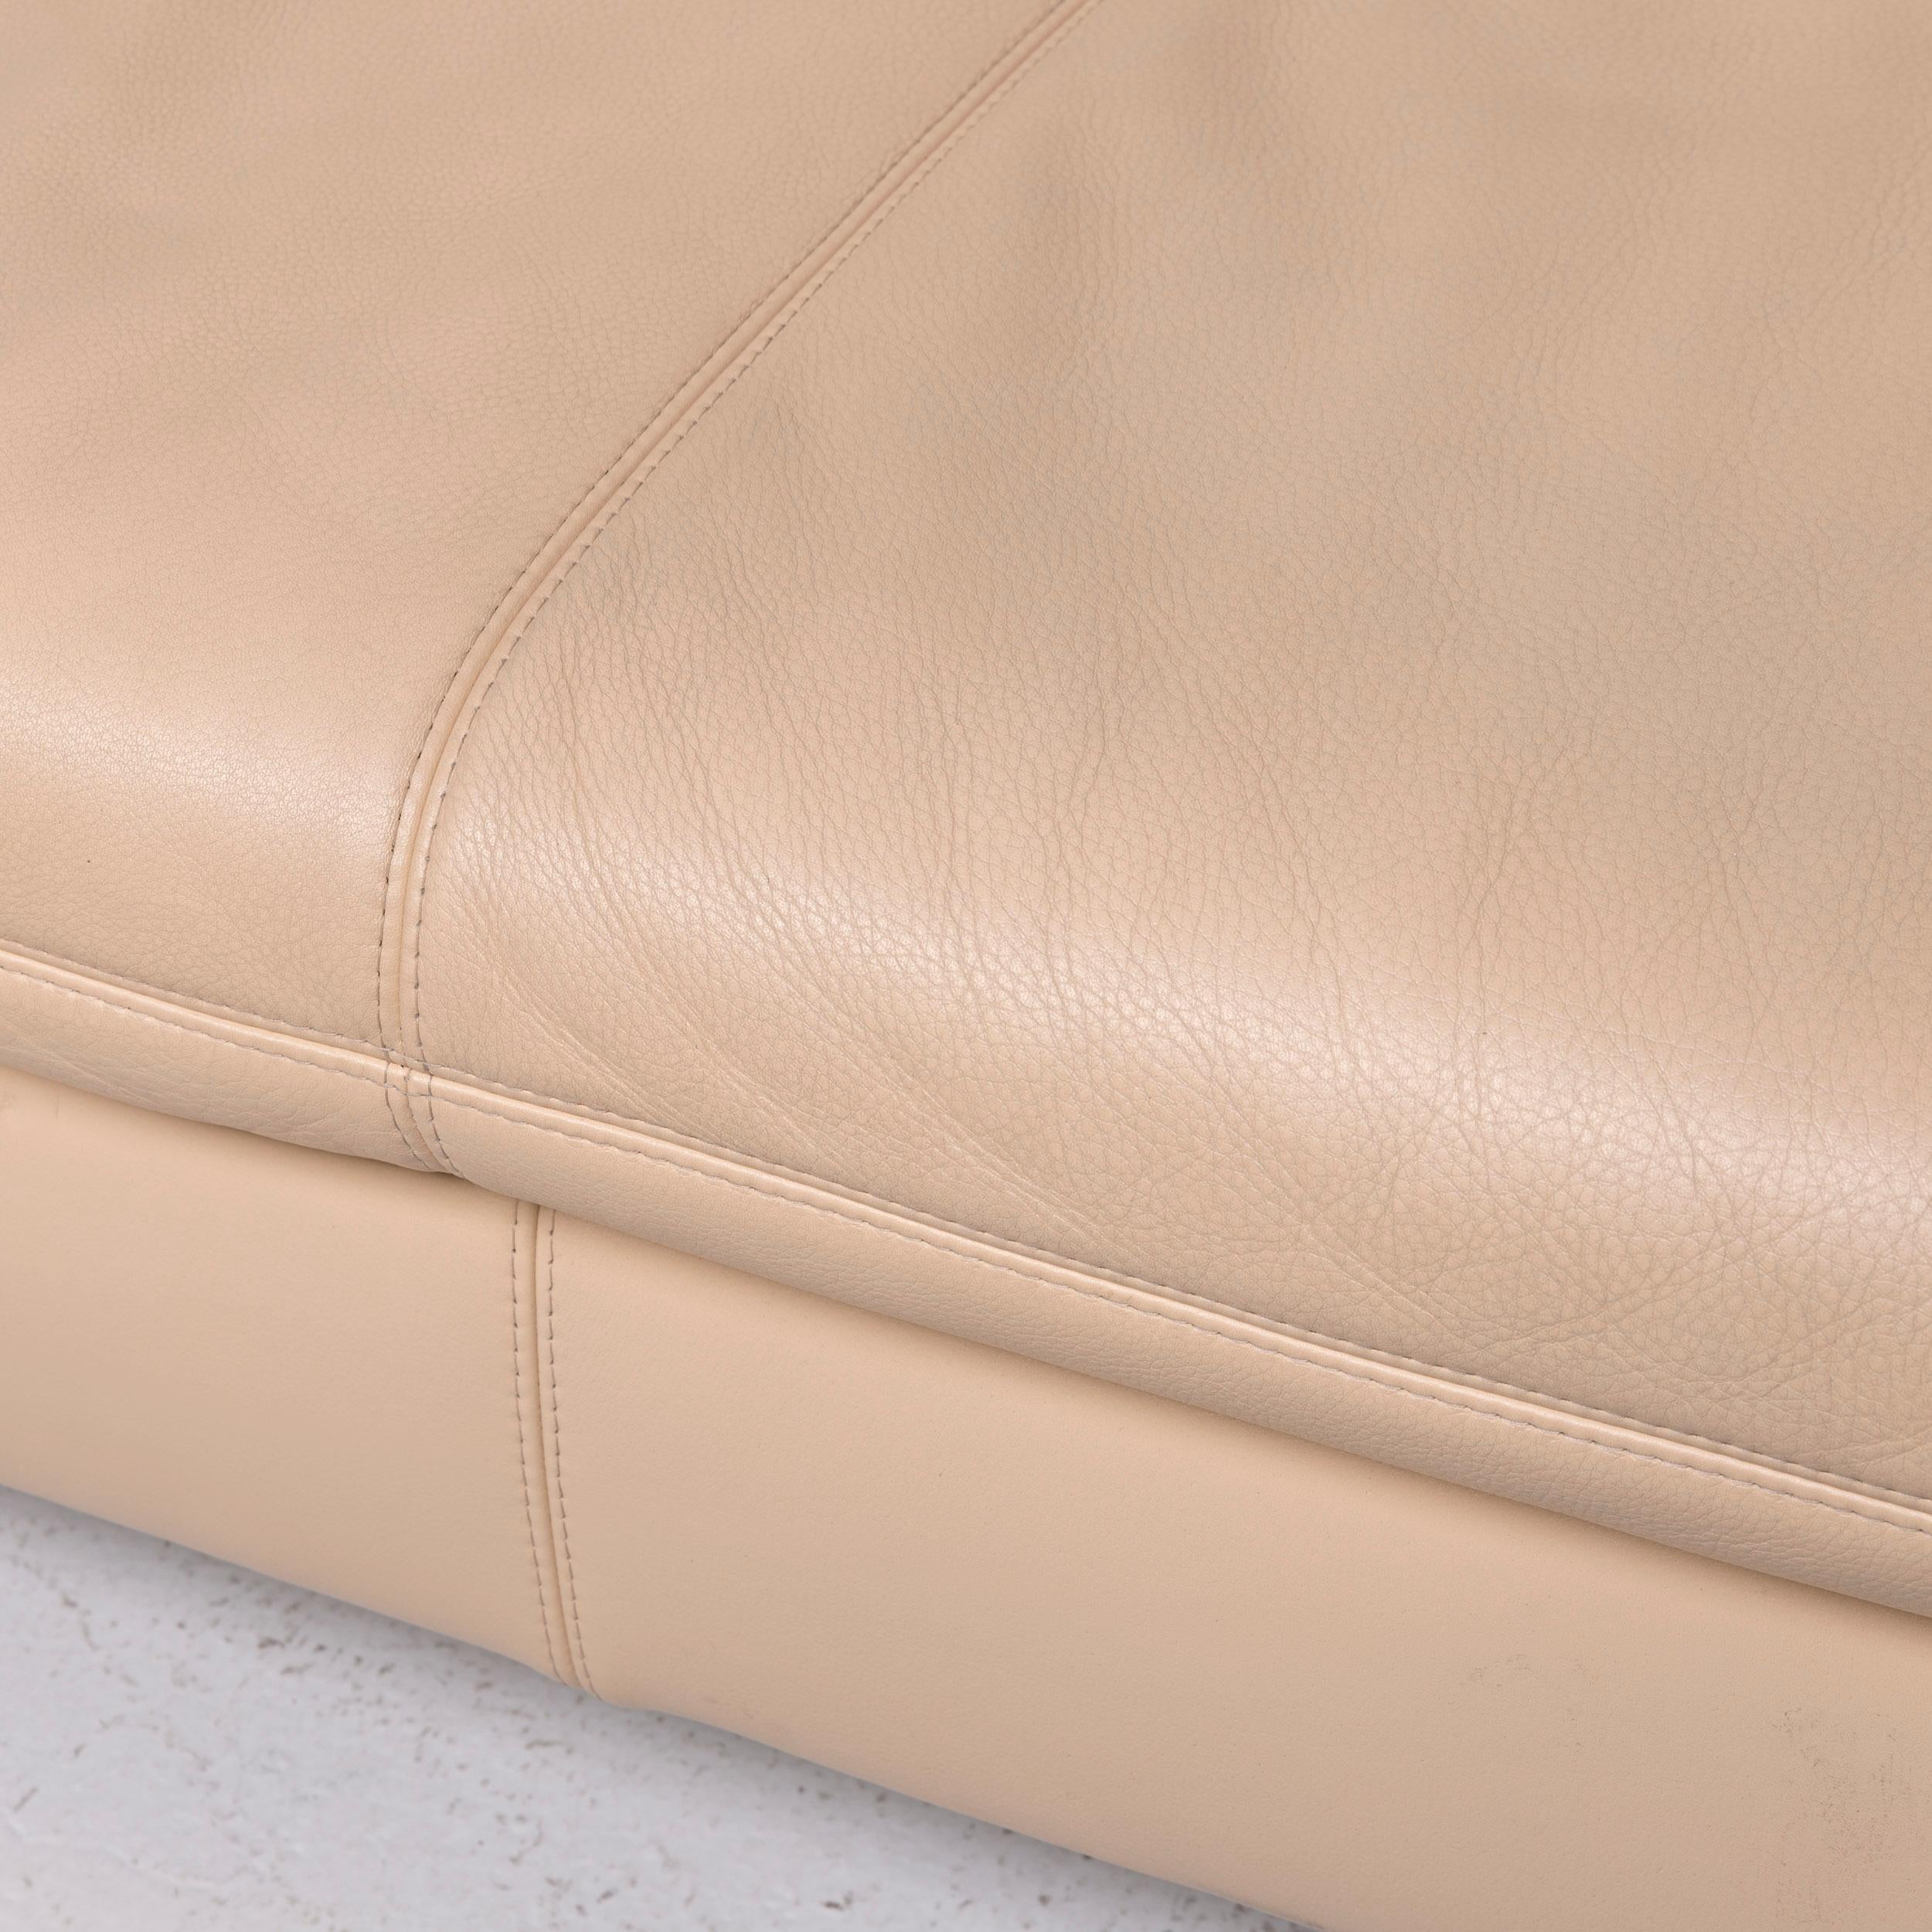 Koinor Rivoli Designer Leather Sofa Beige Genuine Leather Three-Seat Couch In Good Condition For Sale In Cologne, DE